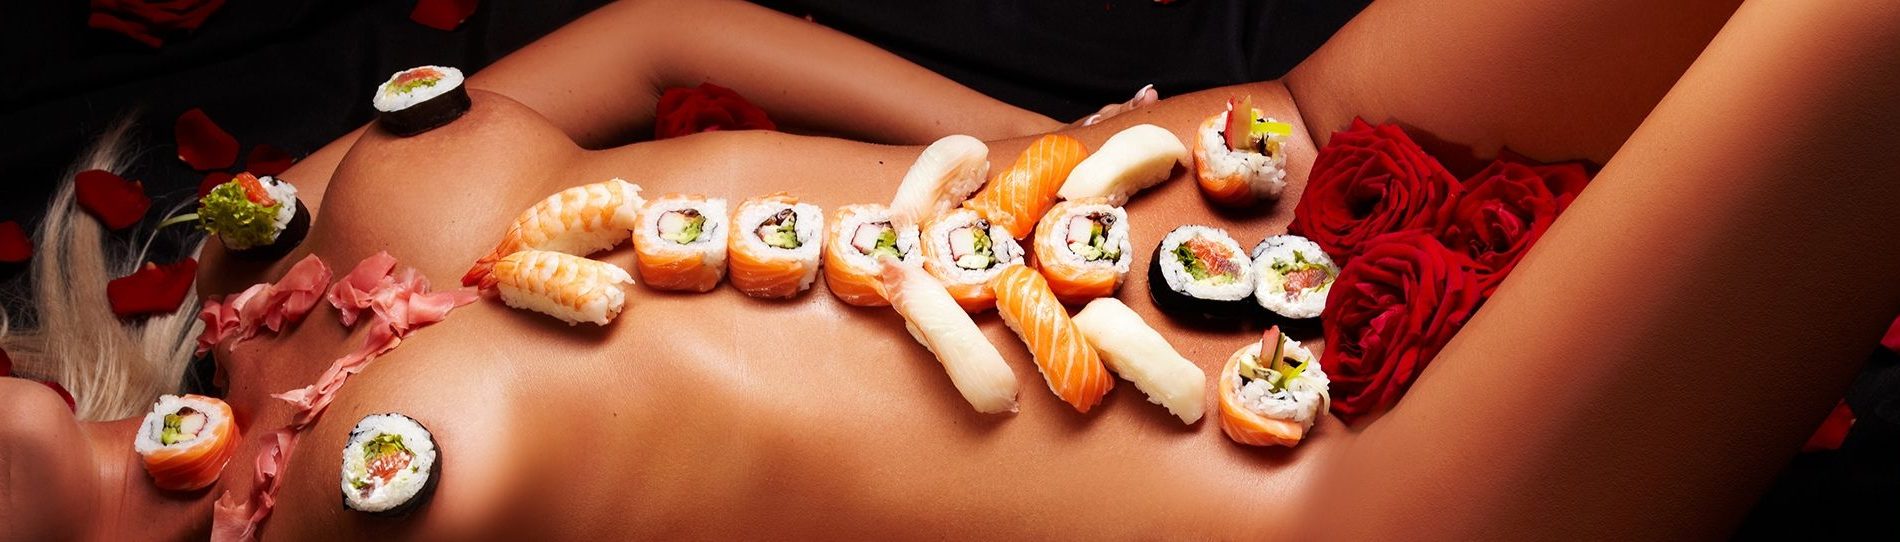 gold coast body sushi on lady lying down